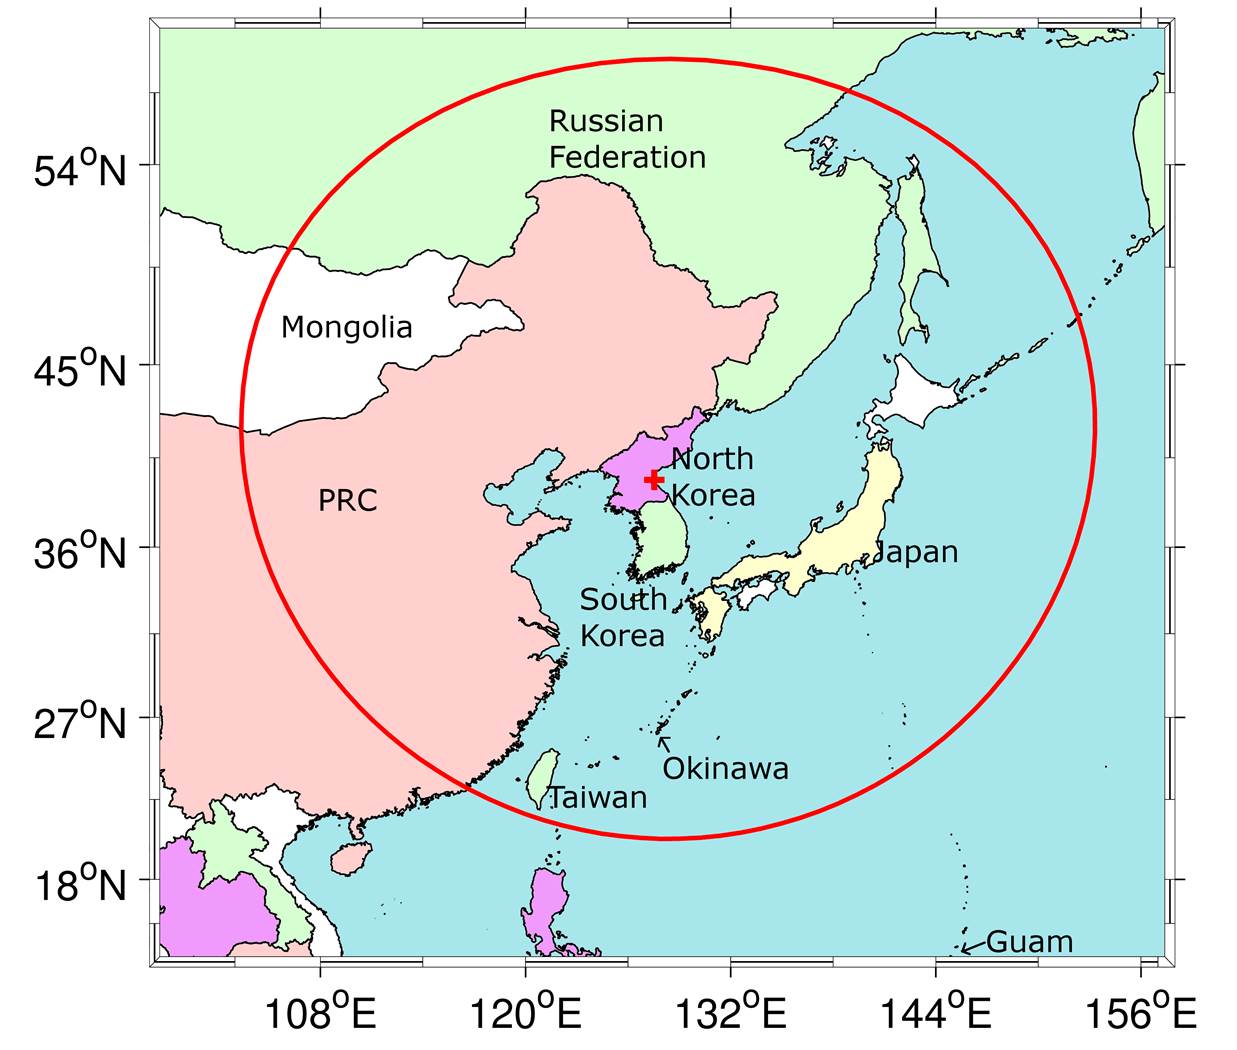 North Korea’s Musudan Missile: A Performance Assessment